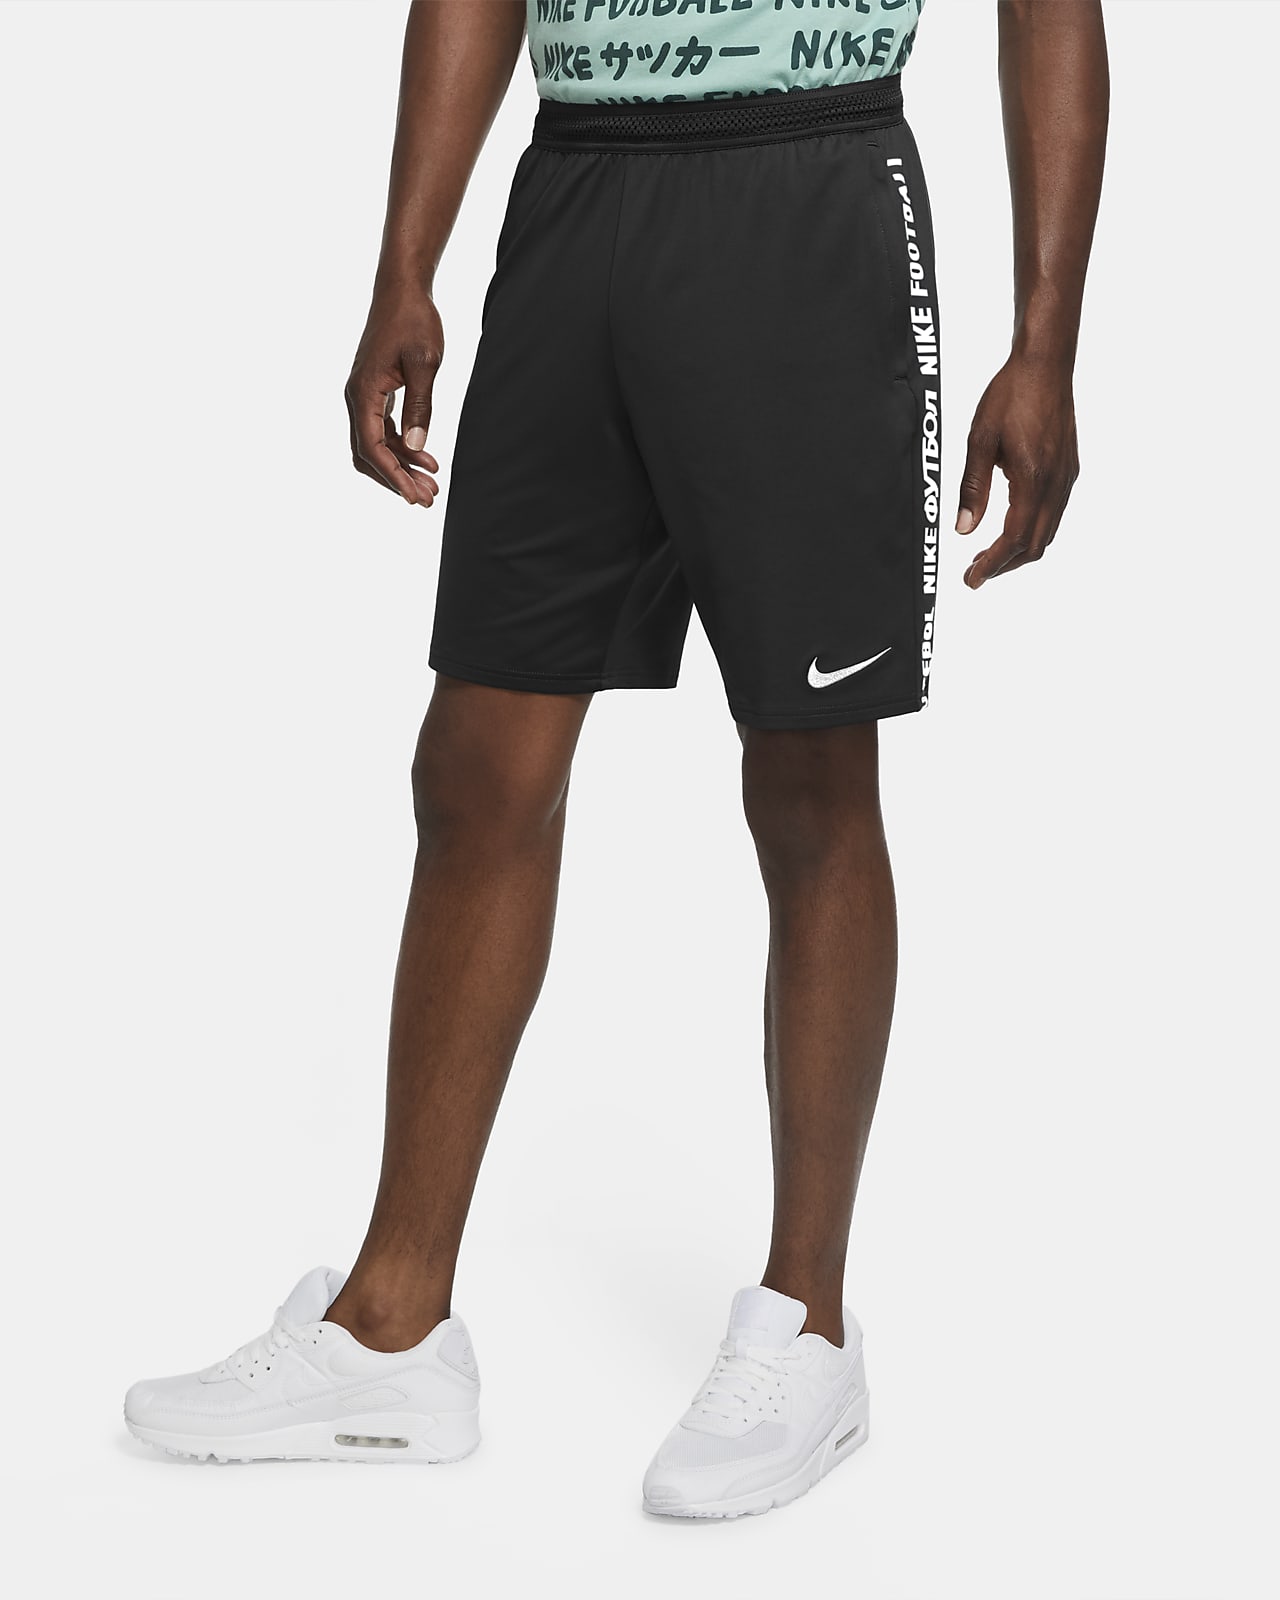 Nike F.C. Men's Knit Football Shorts 